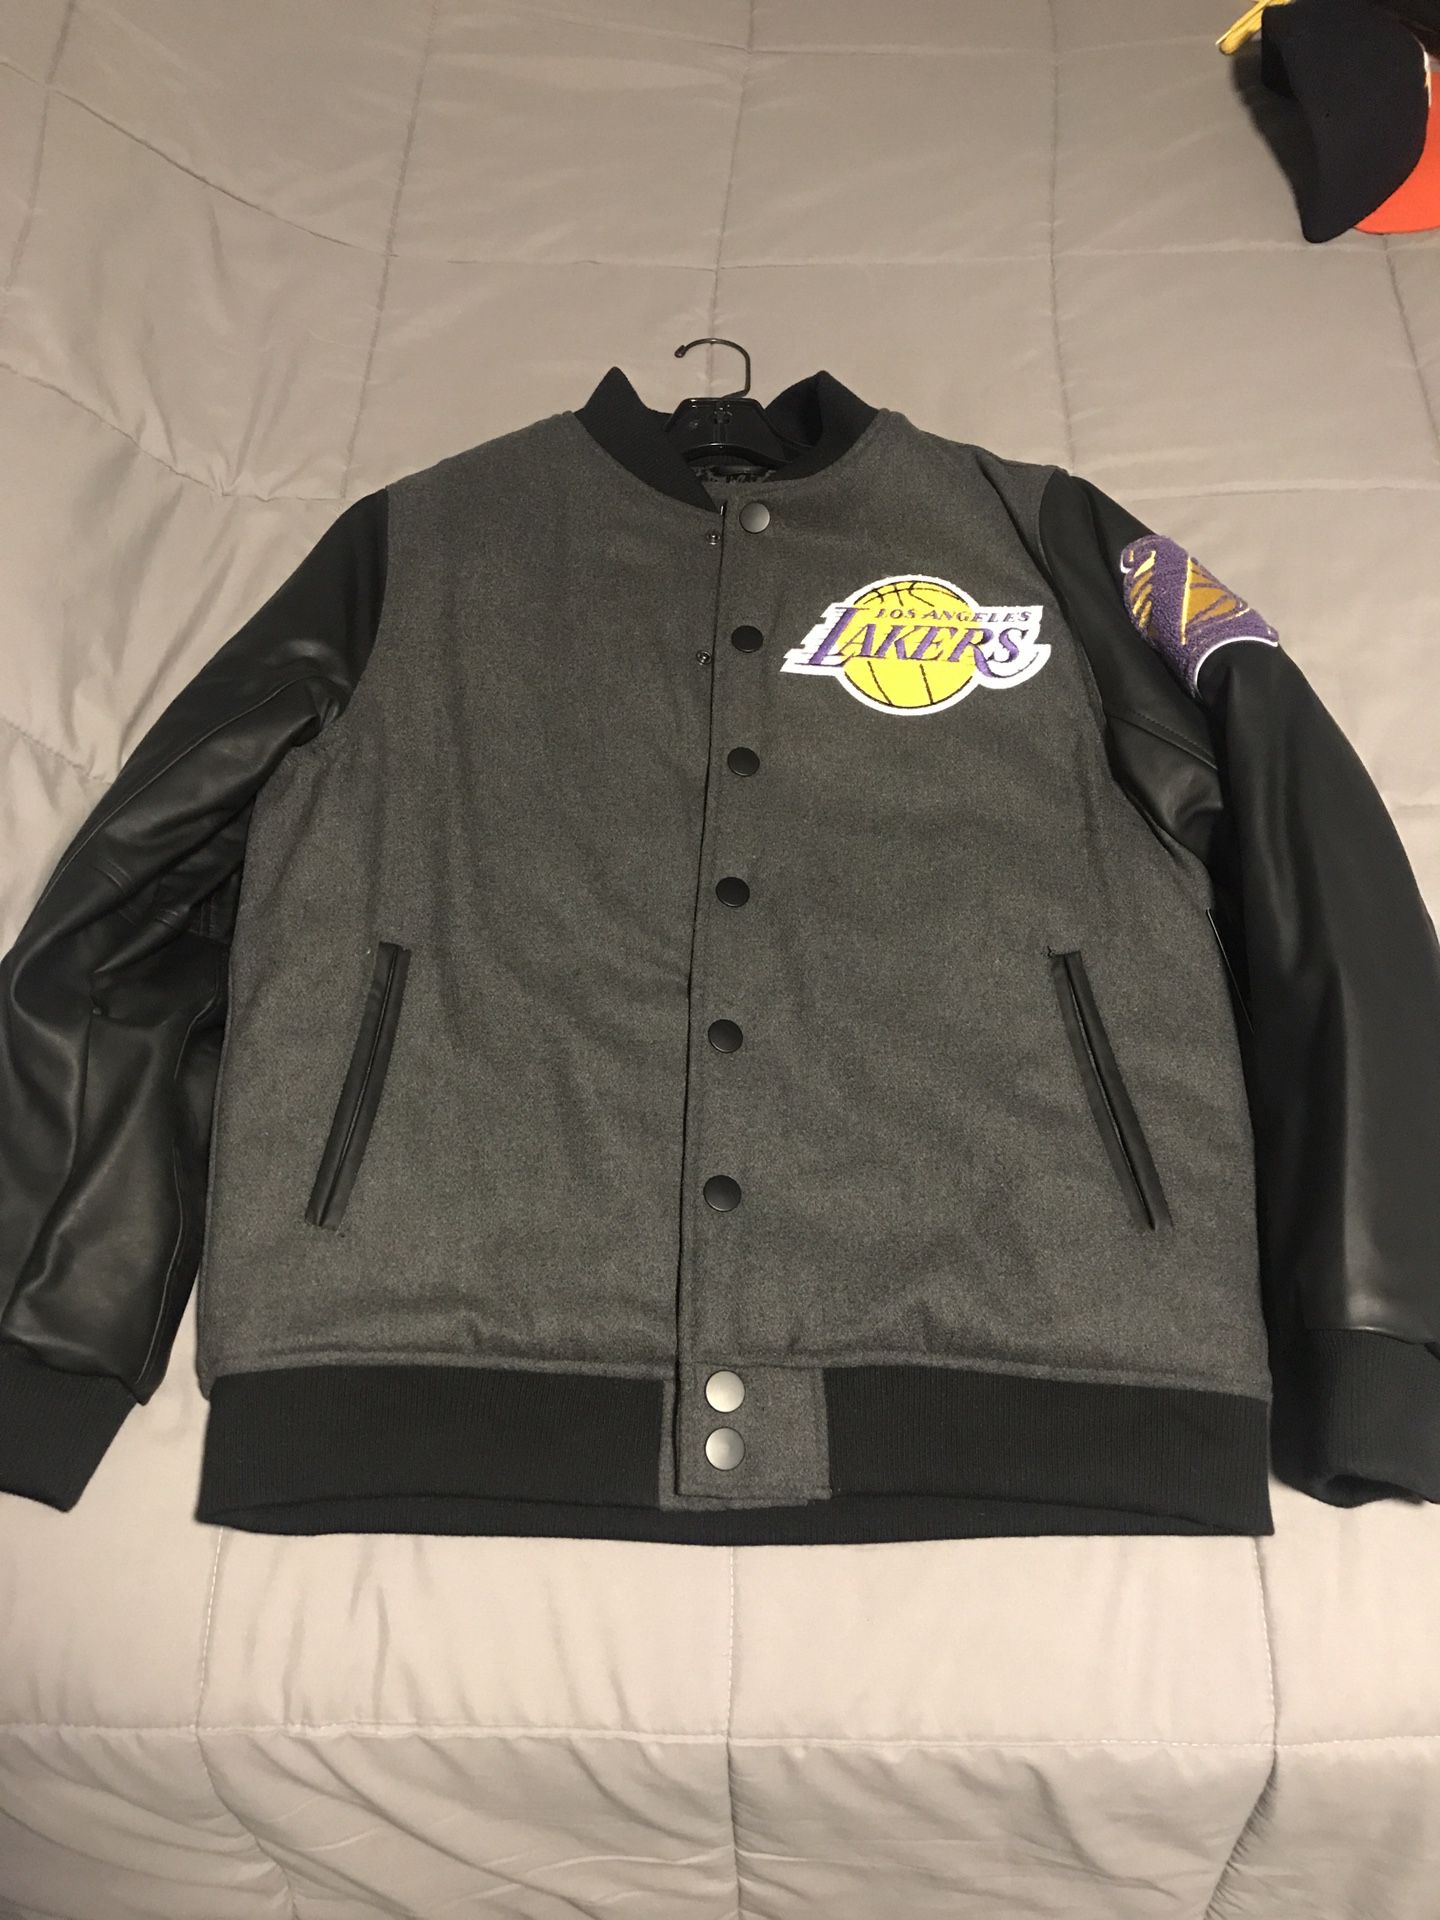 Lakers Jacket (Medium)